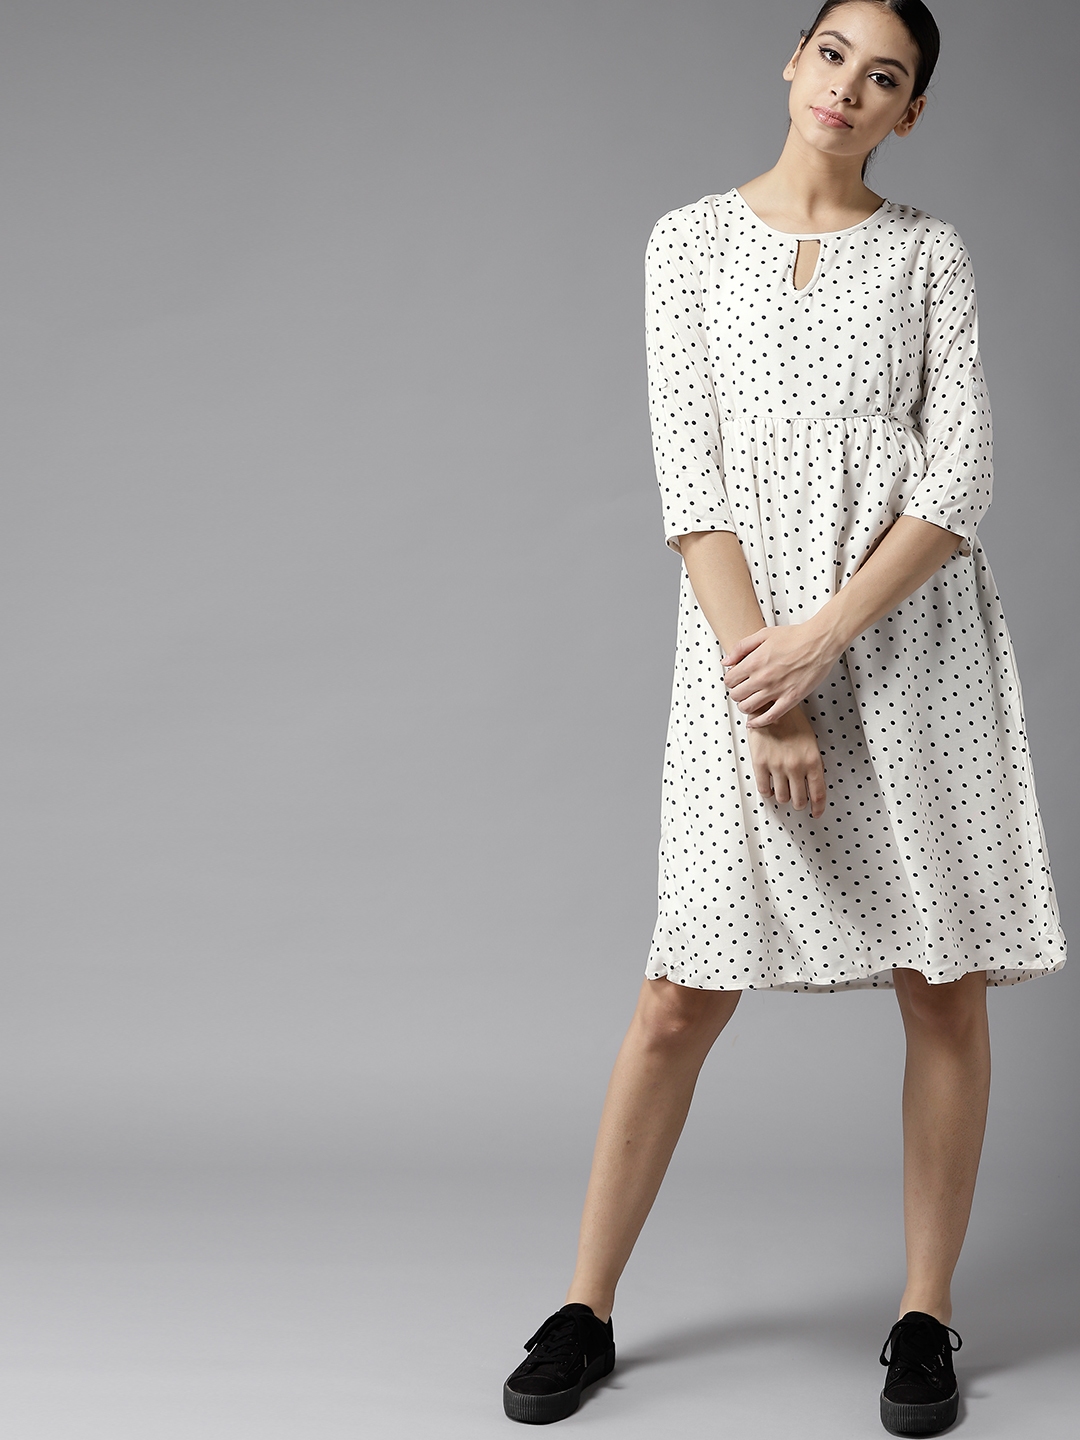 Buy Moda Women White & Black Polka Dot A Line Dress - for Women 7008805 | Myntra